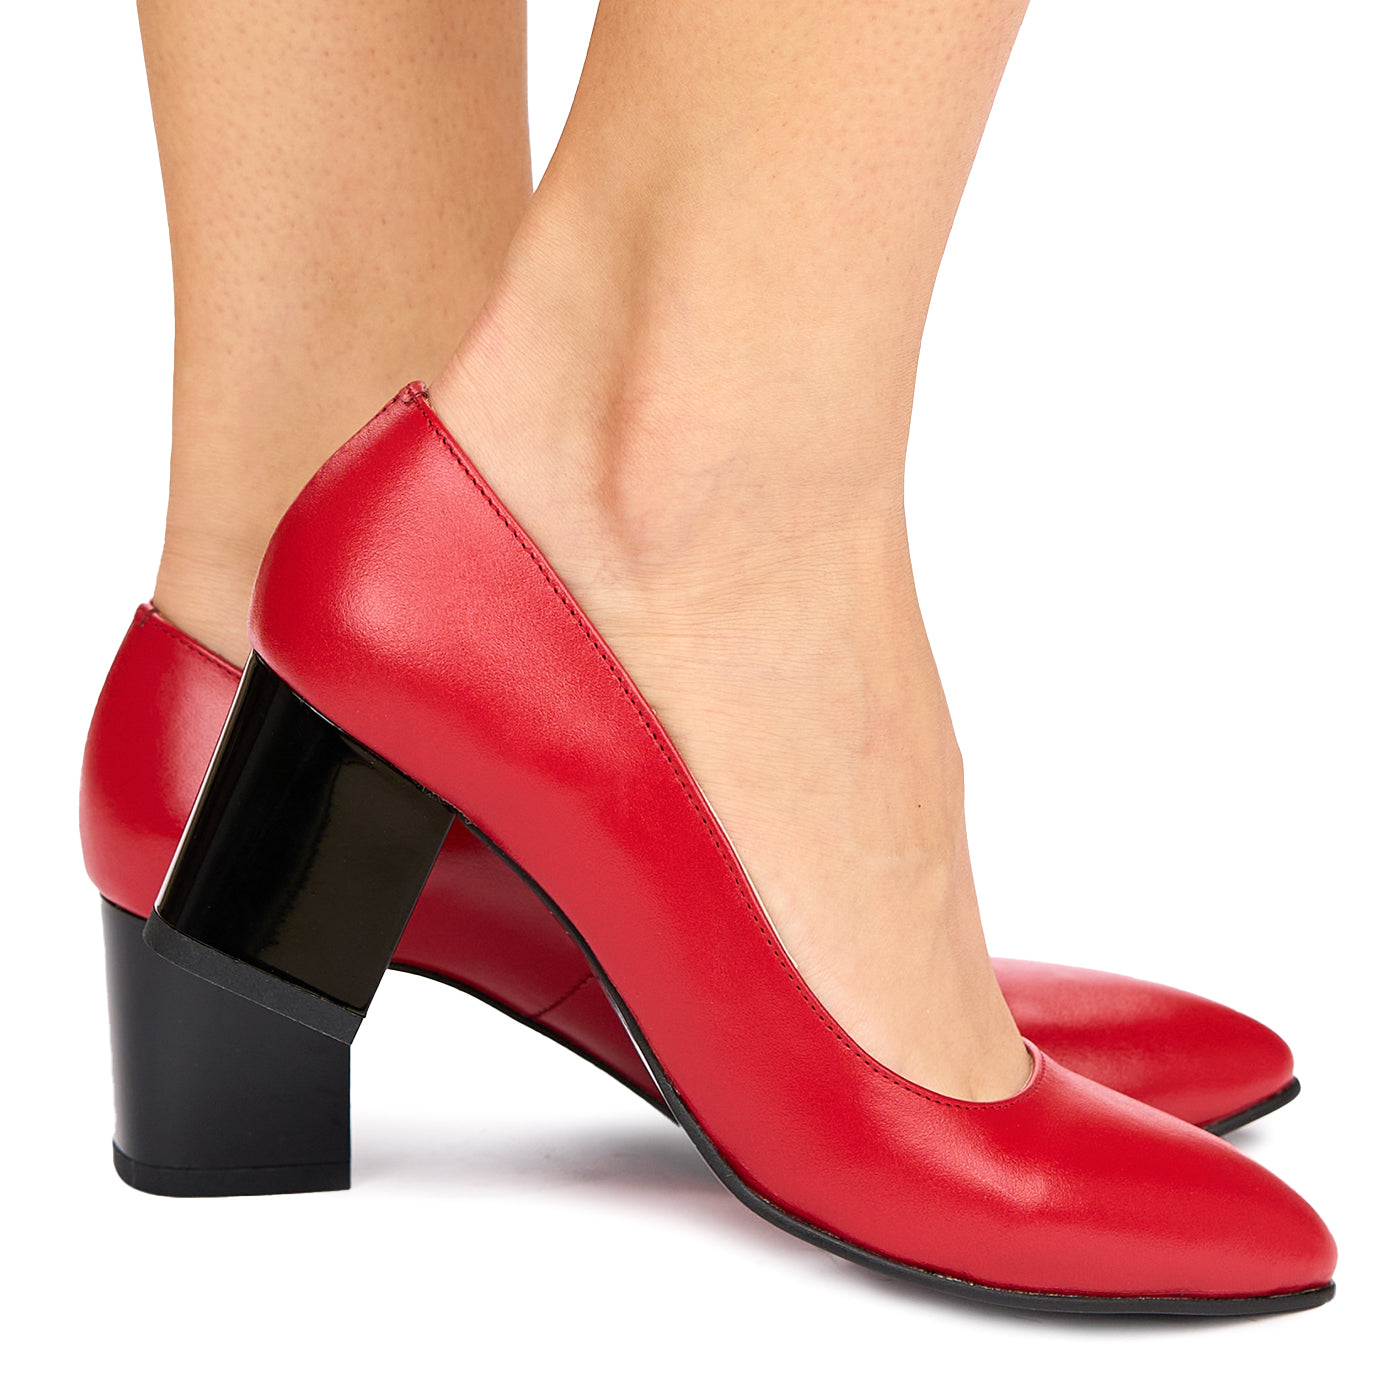 Pantofi dama din piele naturala rosie 9012